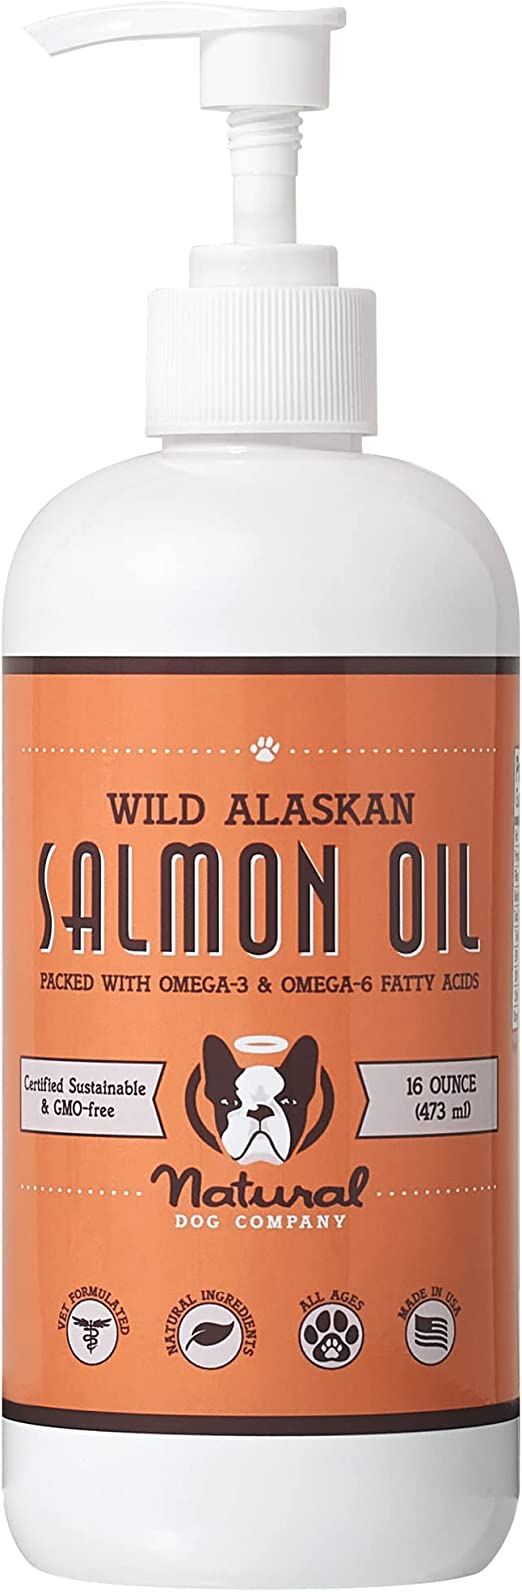 Natural Dog Company Wild Alaskan Salmon Oil 16 oz.